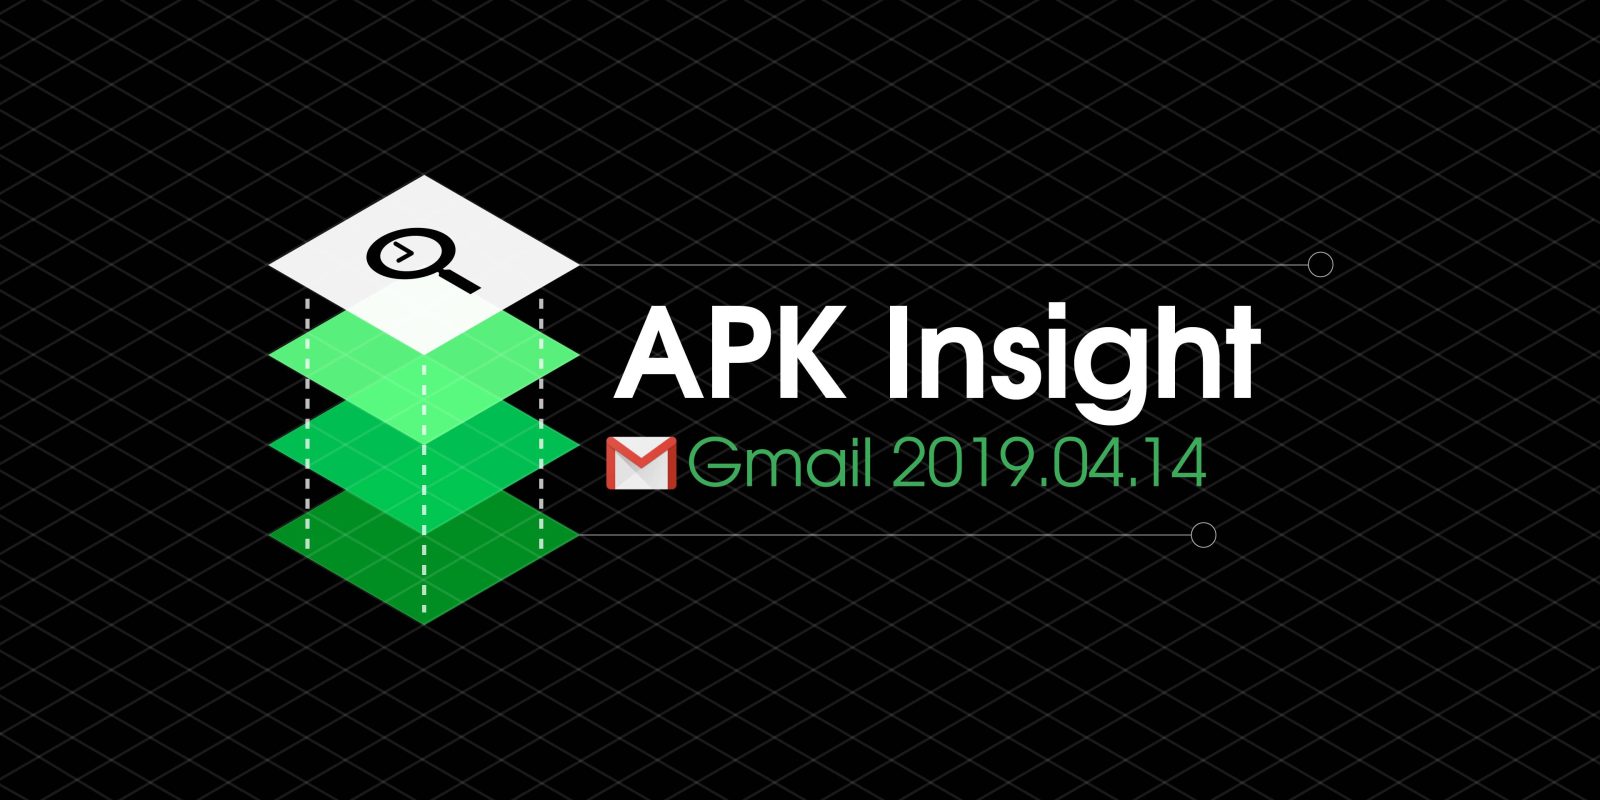 APK Insight Gmail 2019 04 14